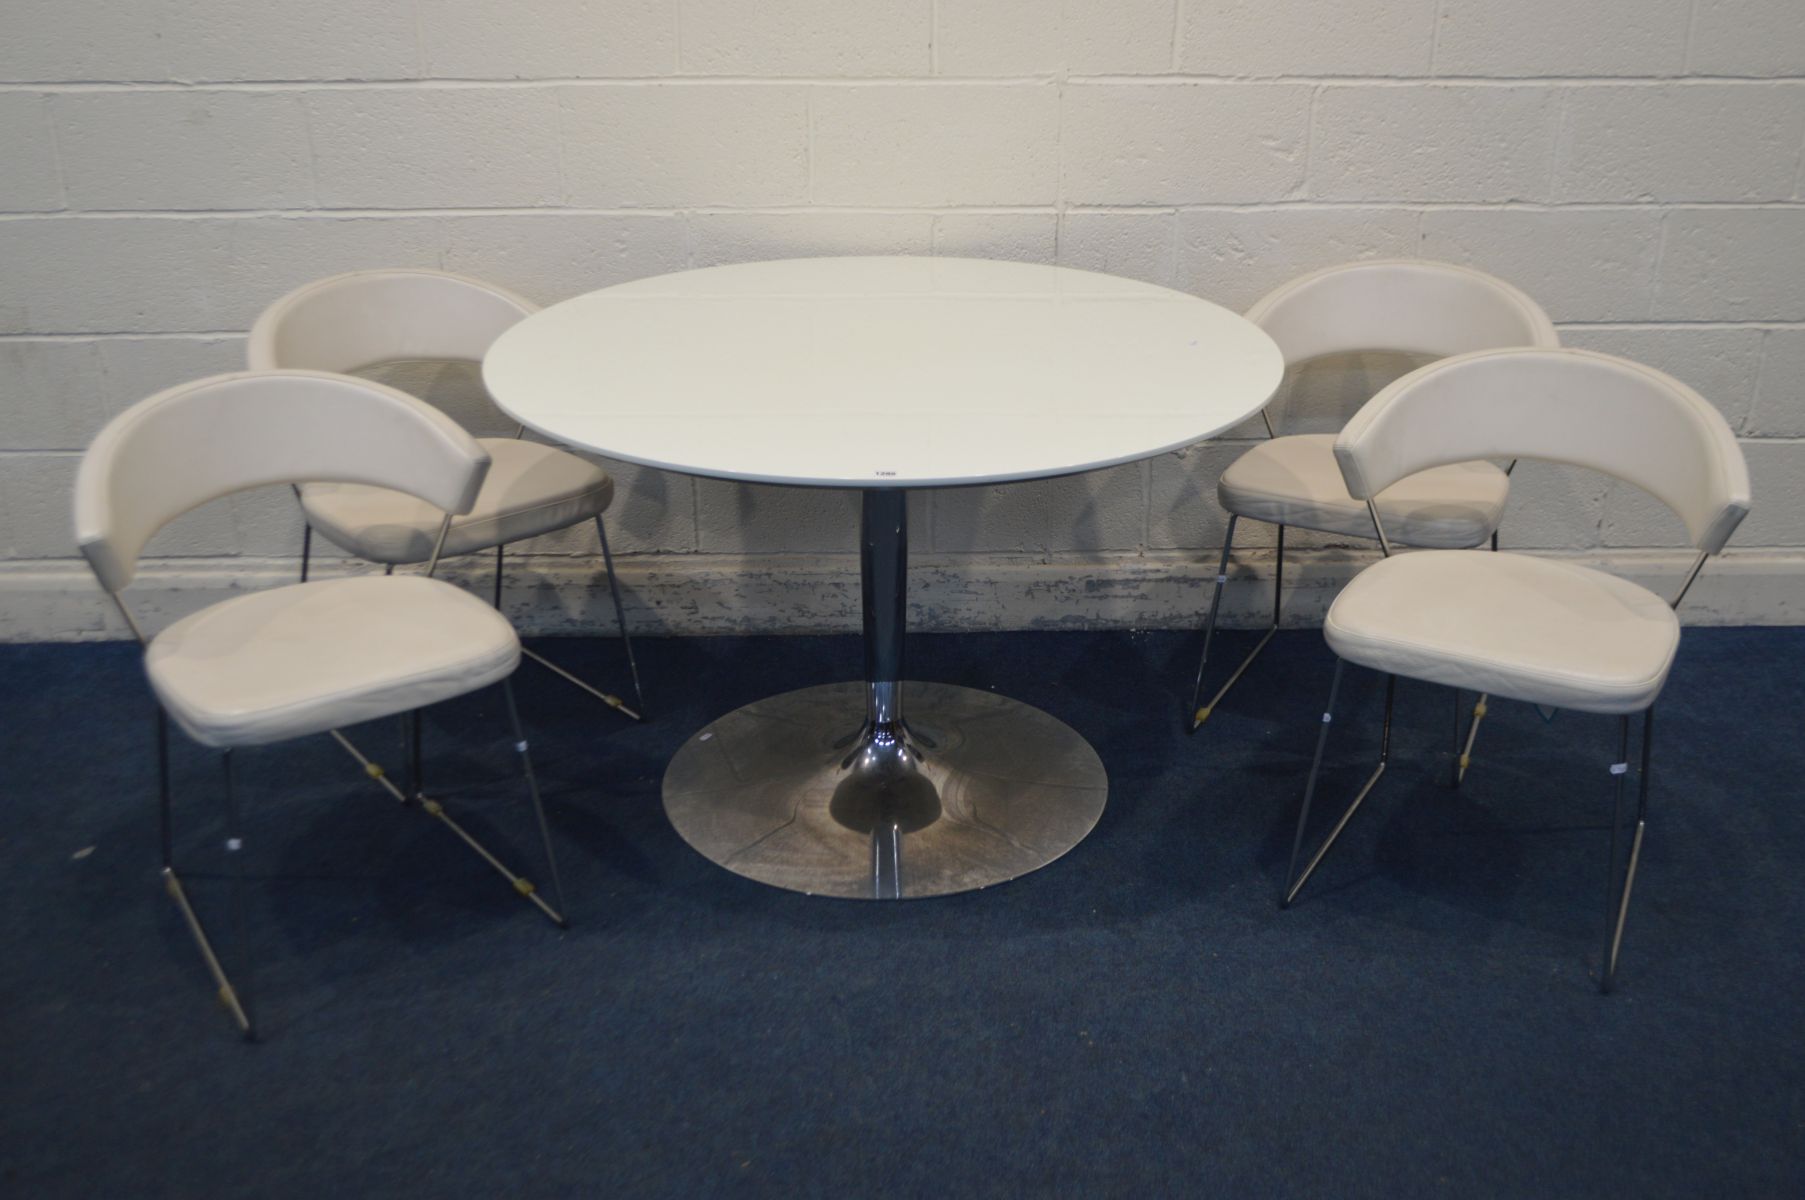 A CALLIGARIS, MODEL PLANET, CIRCULAR DINING TABLE, on a circular chrome base, diameter 120cm x